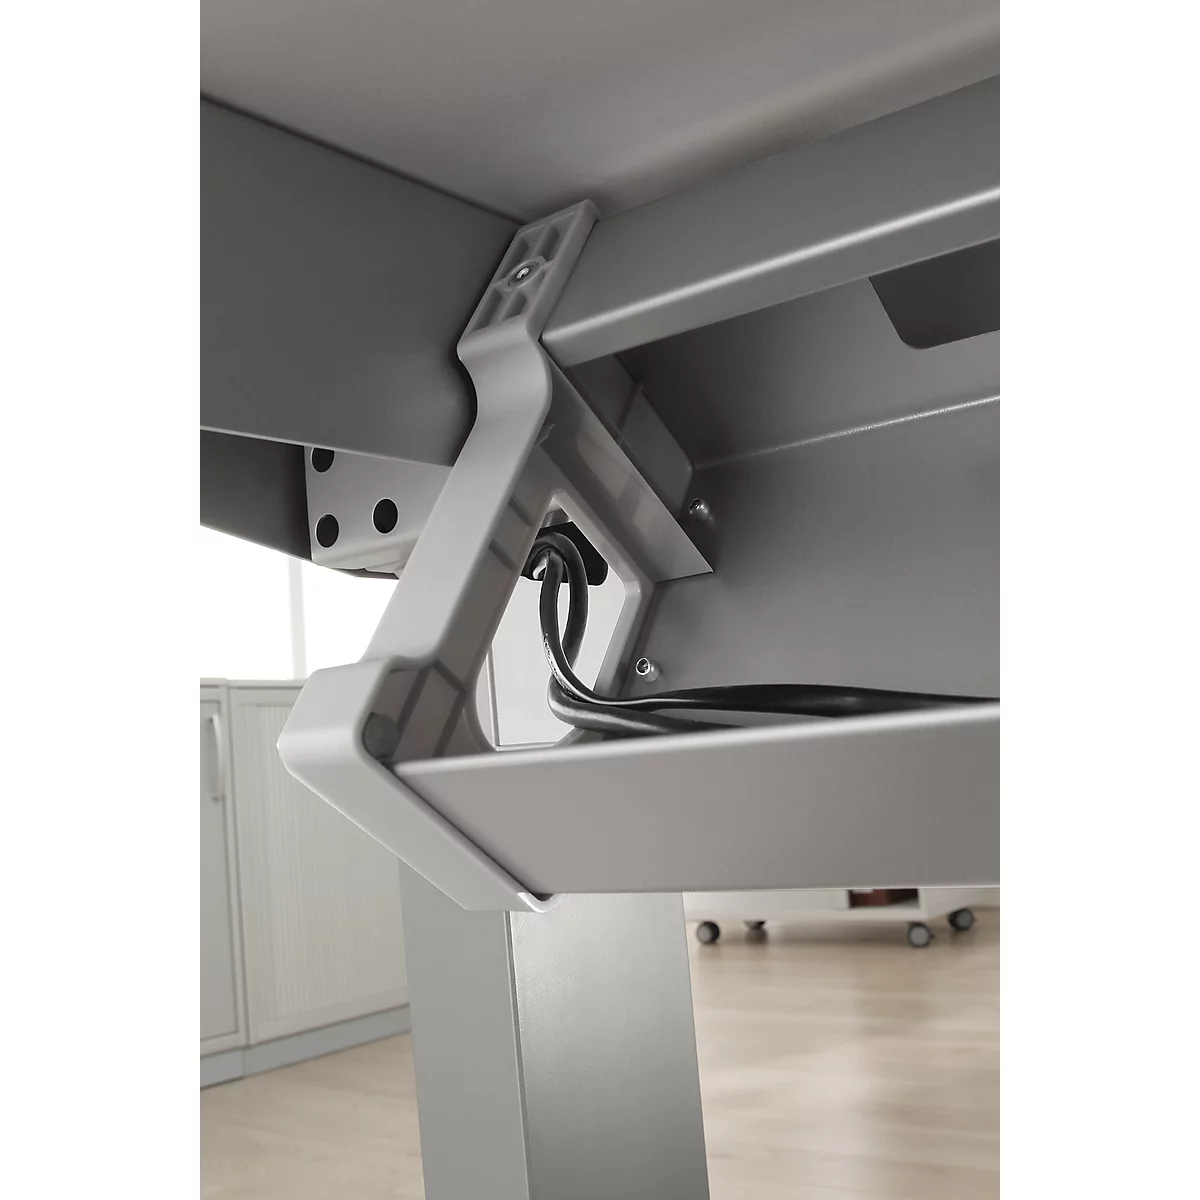 Schfer Shop Select Bandeja portacables de acero, 1200 mm, aluminio brillante, para mesas a partir de 1600 mm de ancho